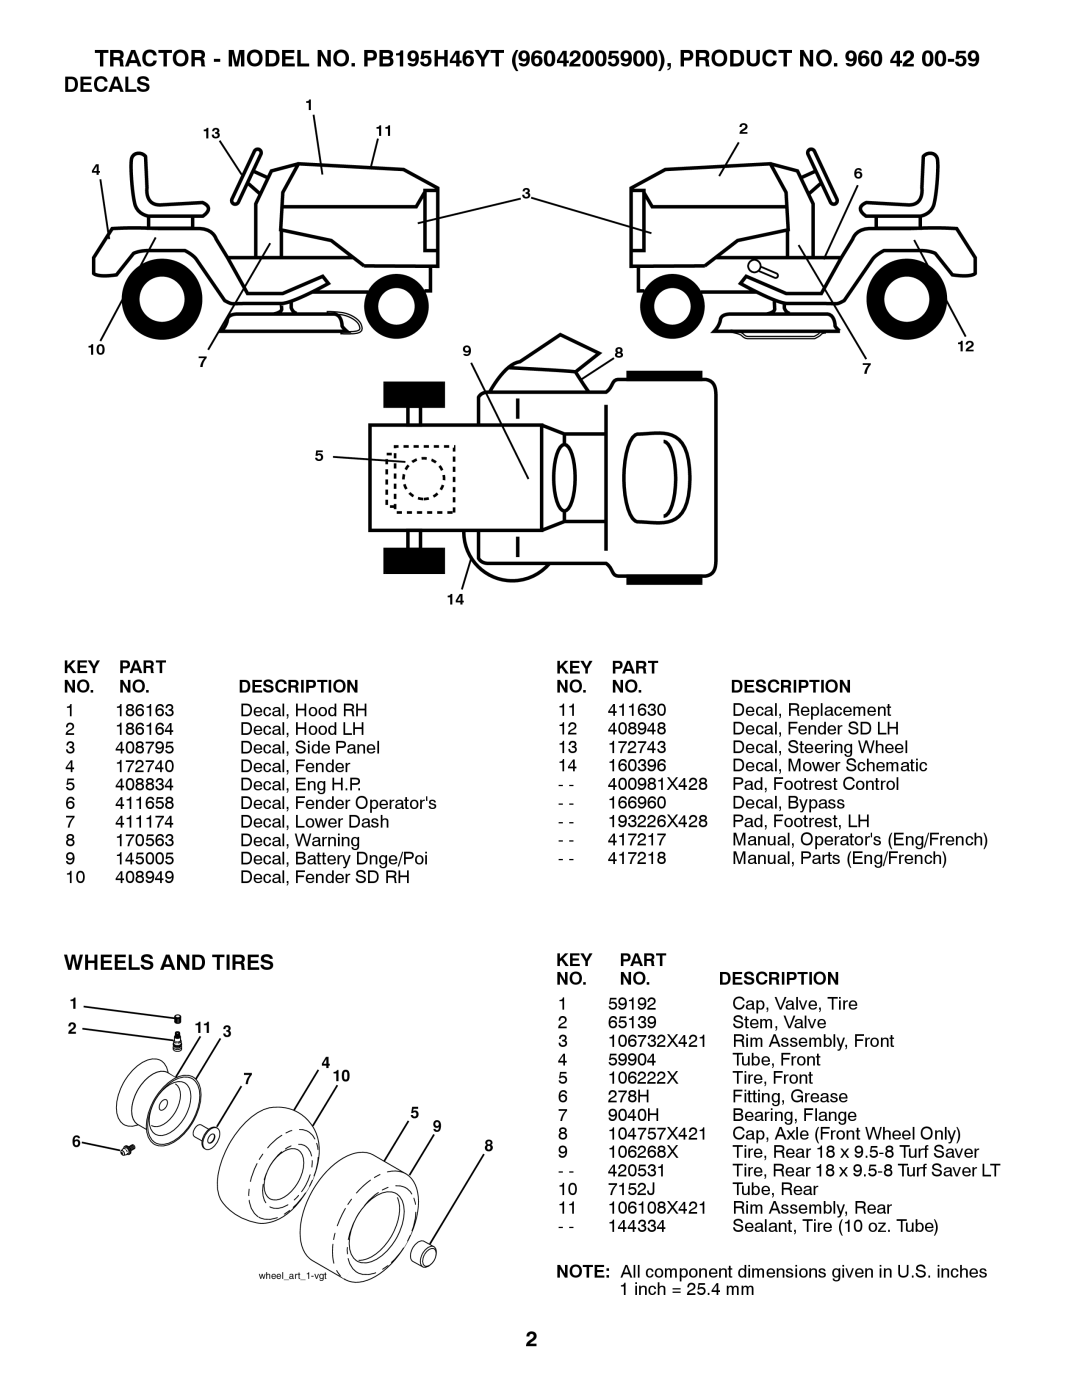 Poulan TRACTOR - MODEL NO. PB195H46YT 96042005900, PRODUCT NO. 960 42, Decals, Wheels And Tires, Part, Description 